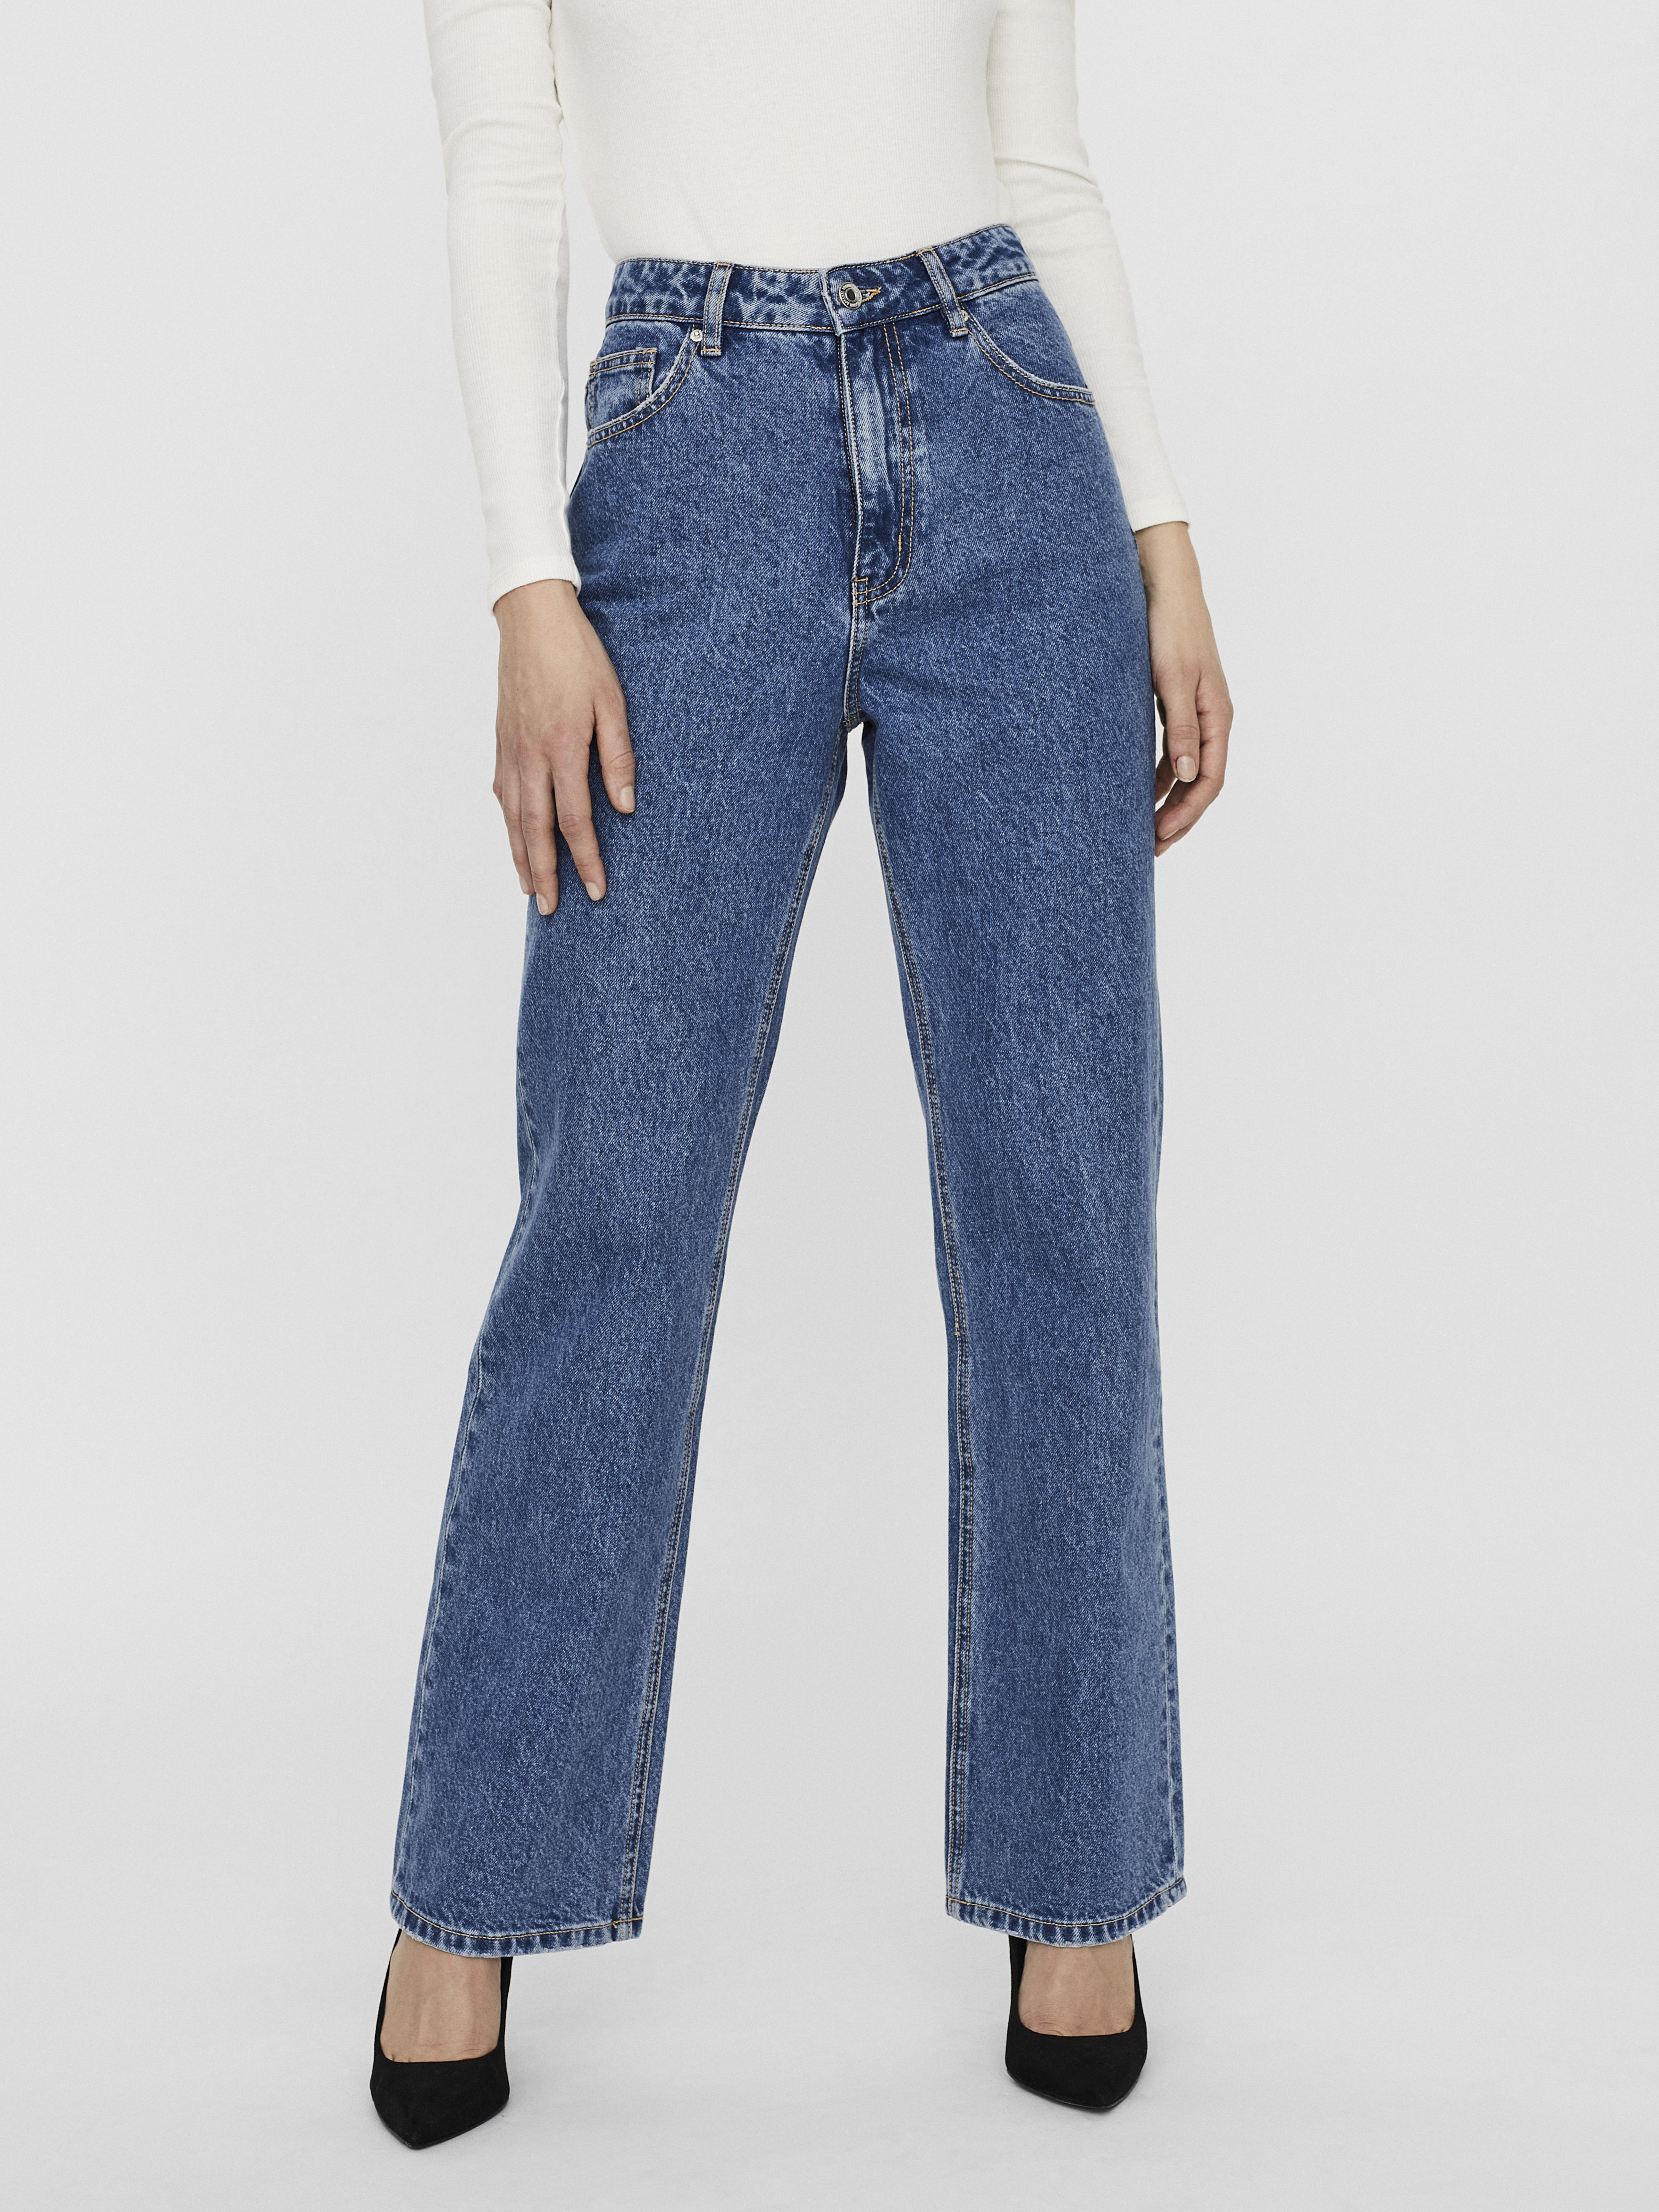 Kithy Jeans, Medium Blue Denim, W29/L34